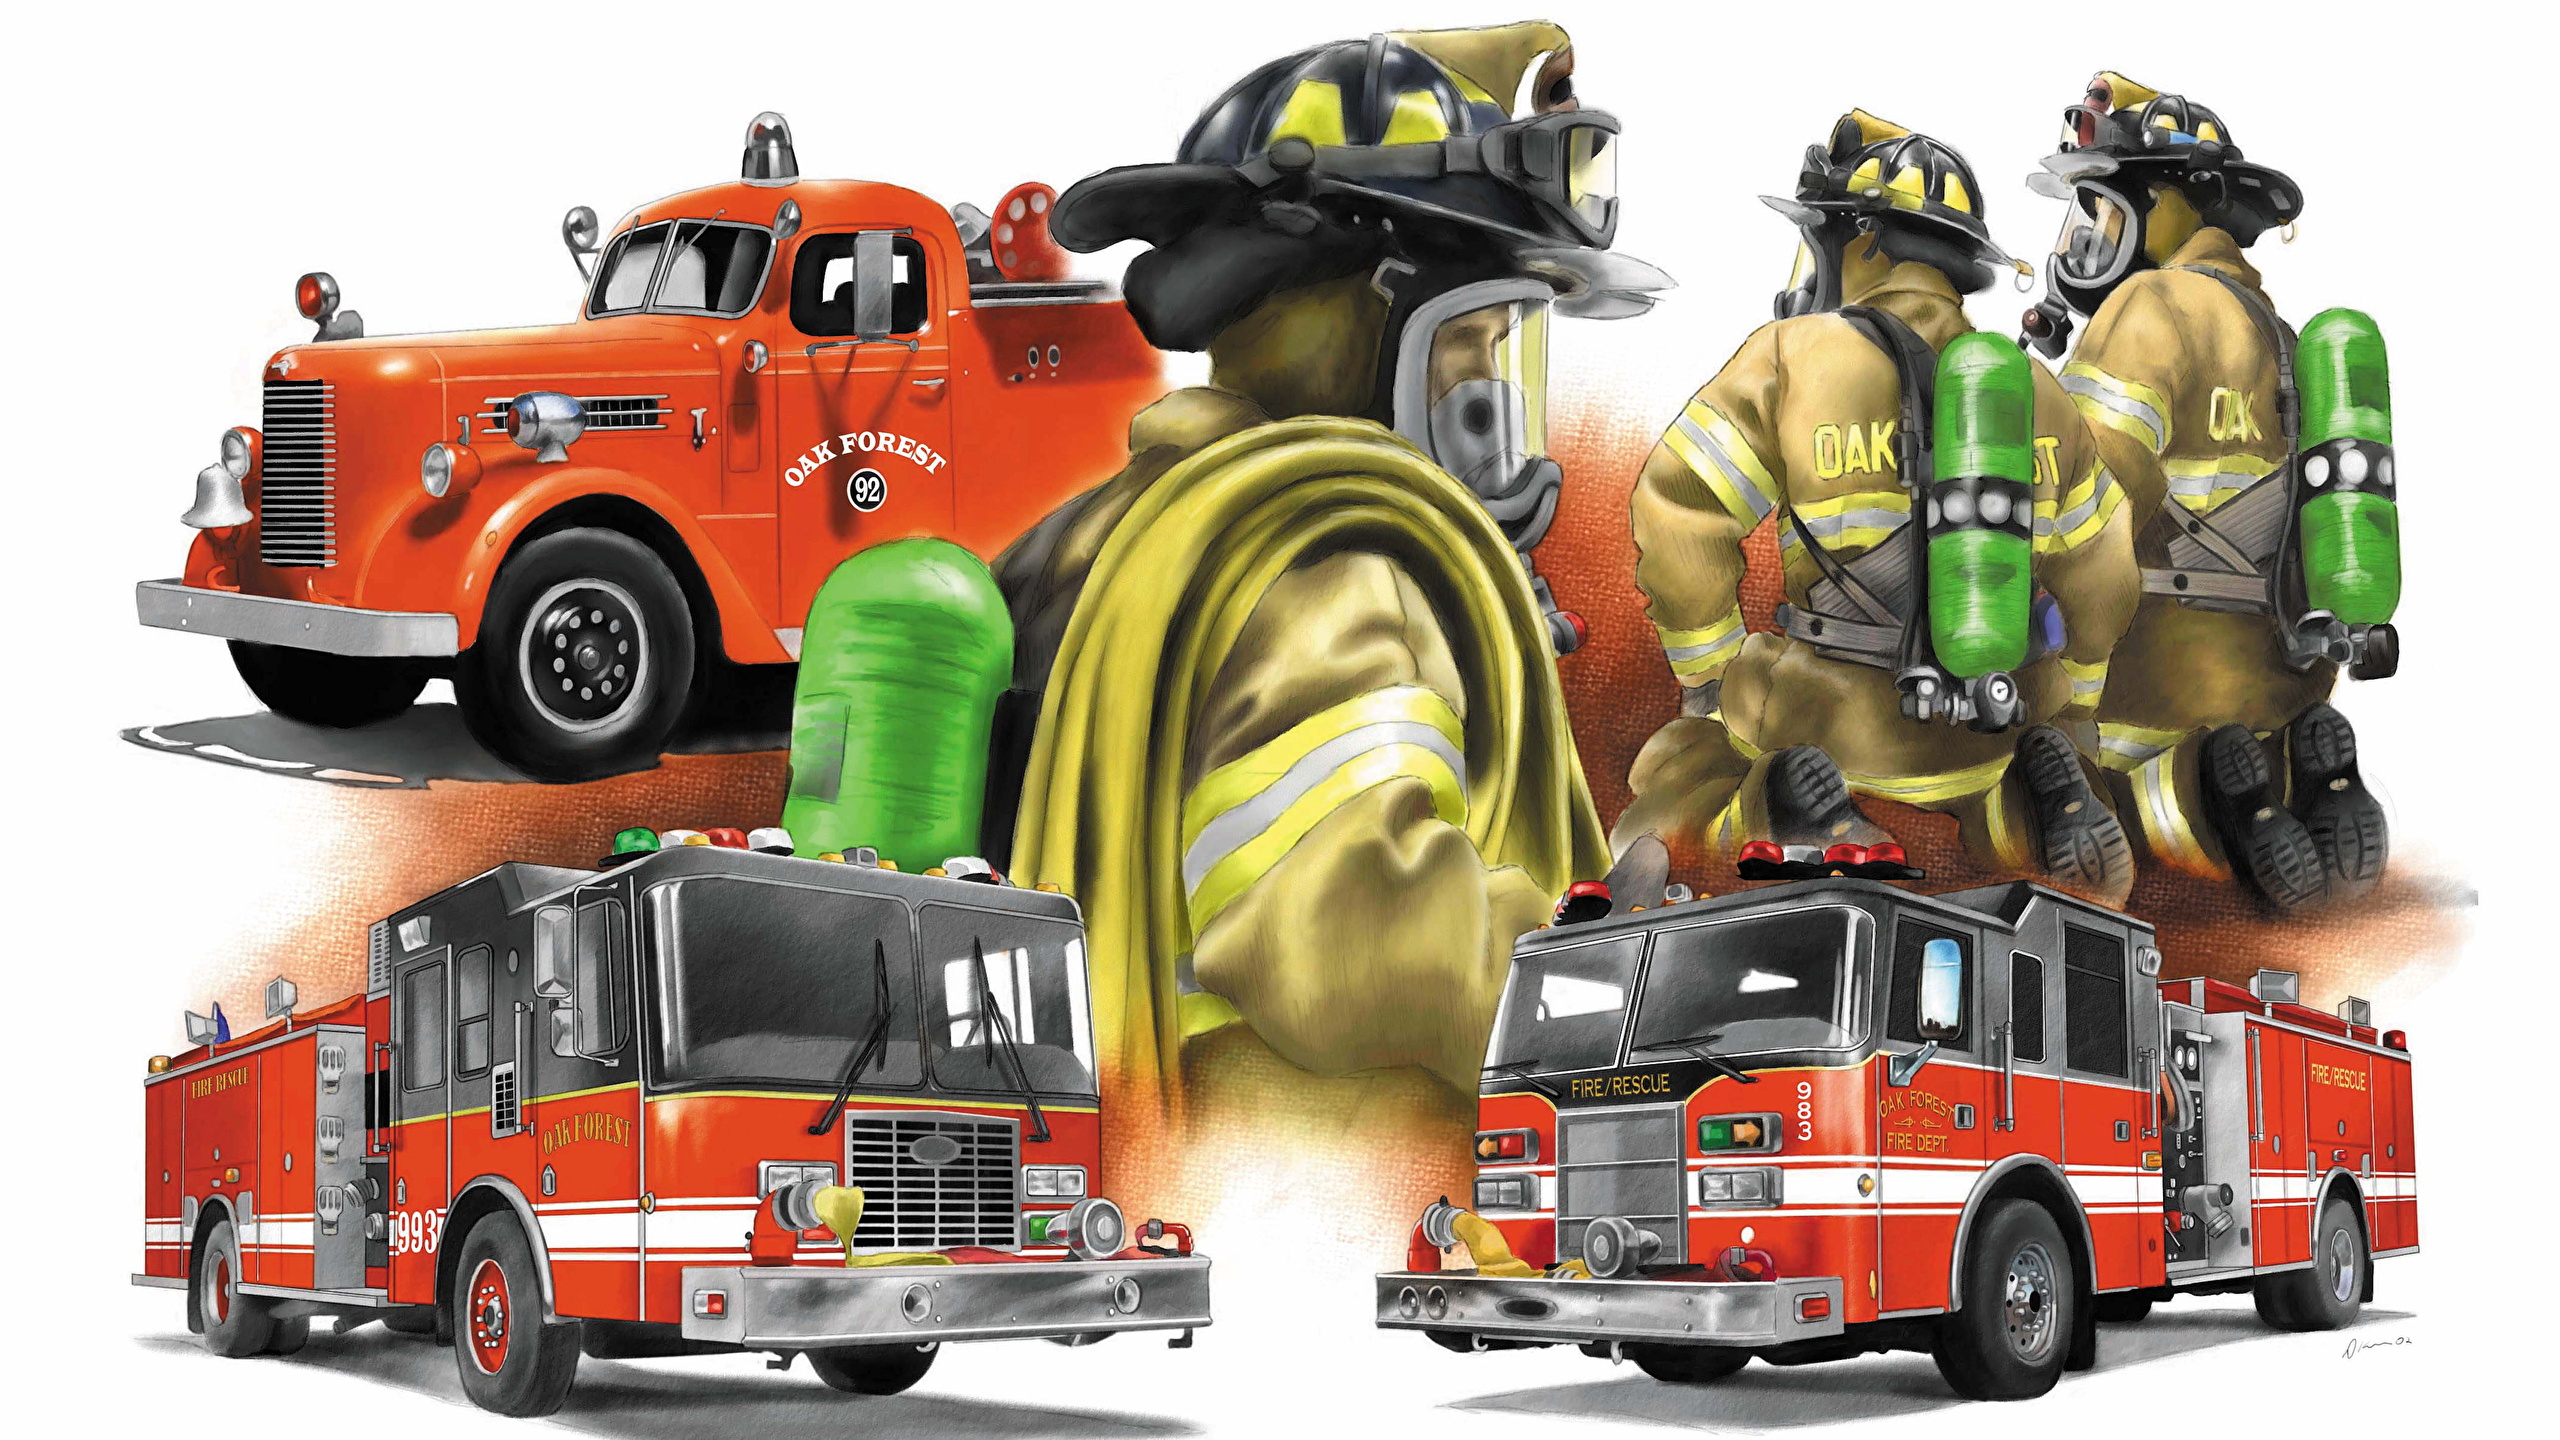 Fondos de Pantalla 2560x1440 Dibujado Vehículo de bomberos Firefighters  Máscara antigás Coches descargar imagenes